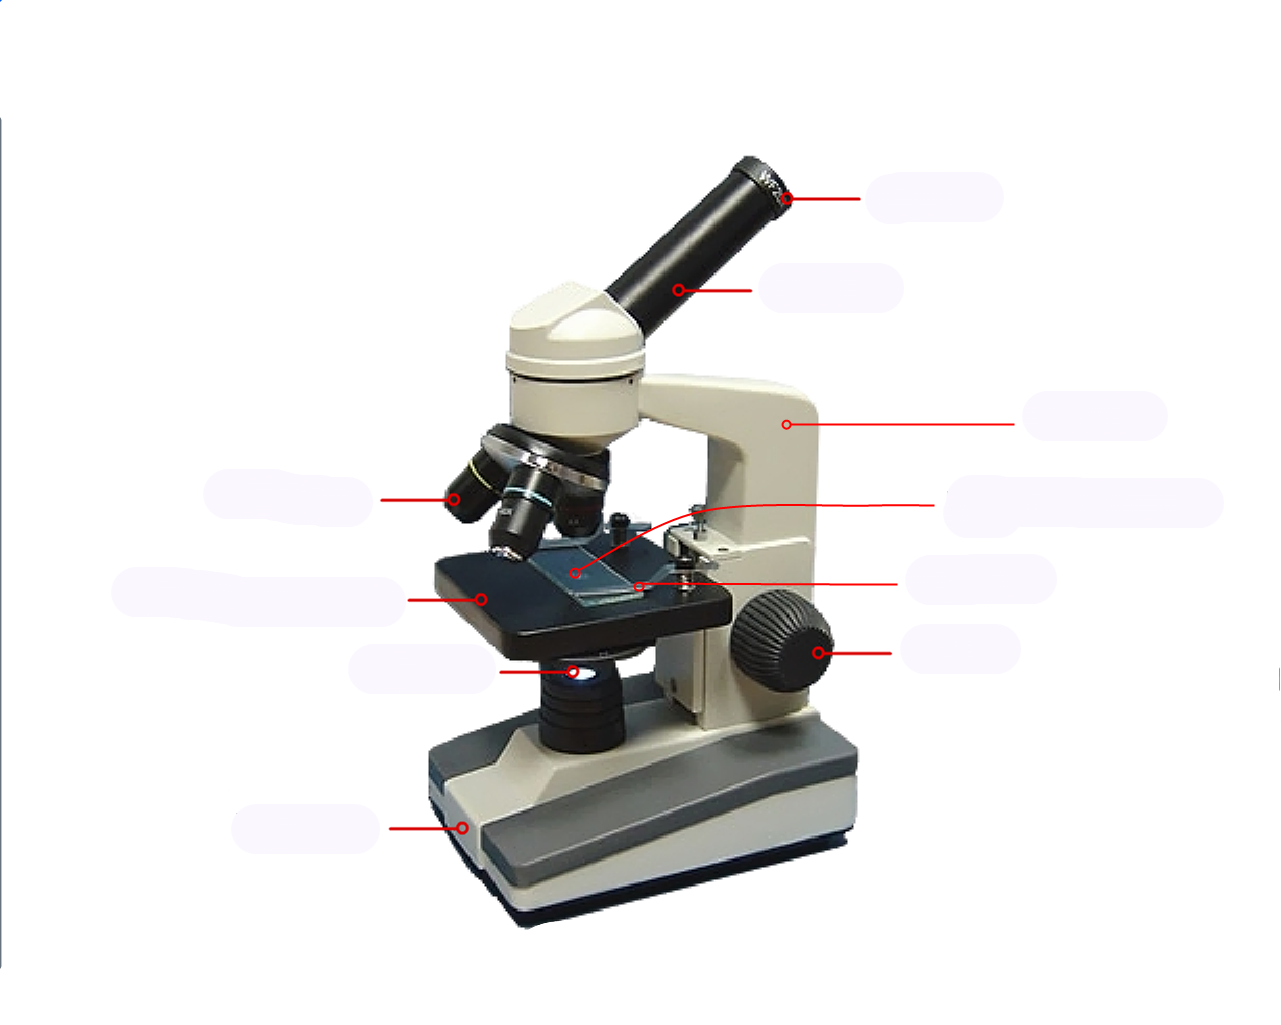 Фото микроскопа 5 класс биология с подписями